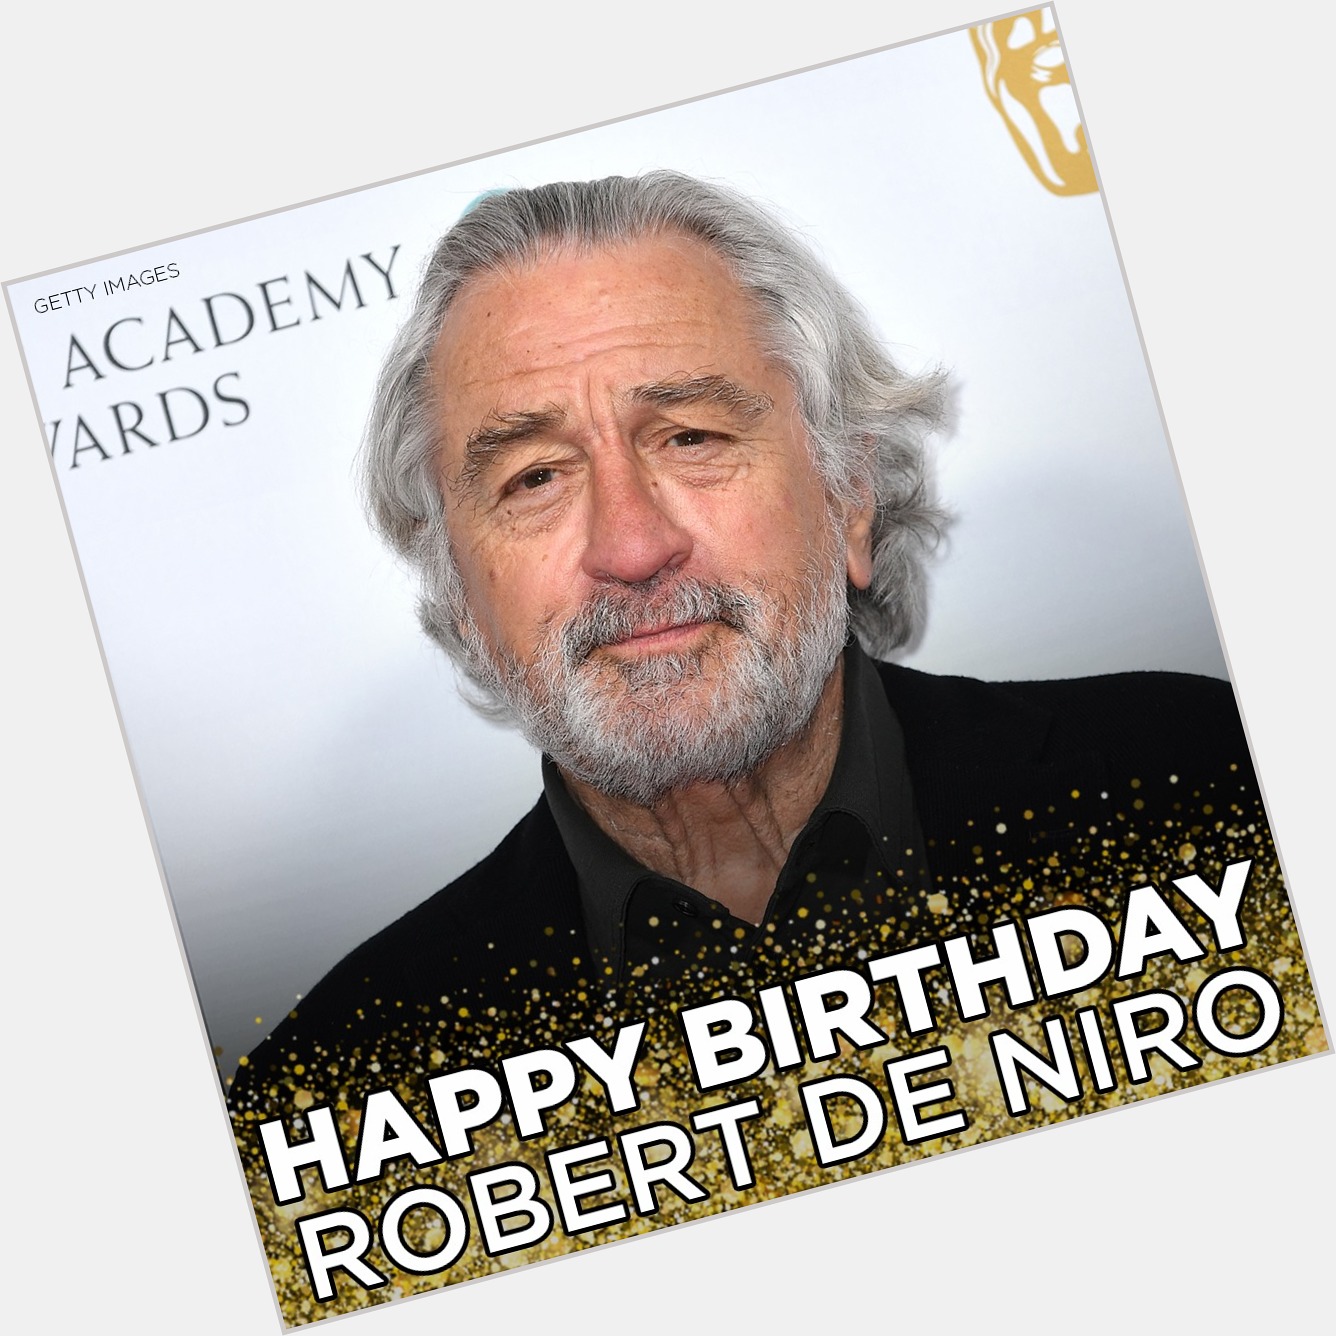 HAPPY BIRTHDAY! Robert De Niro Jr. turns 77 today. The Oscar-winning actor was born on Aug. 17, 1943   